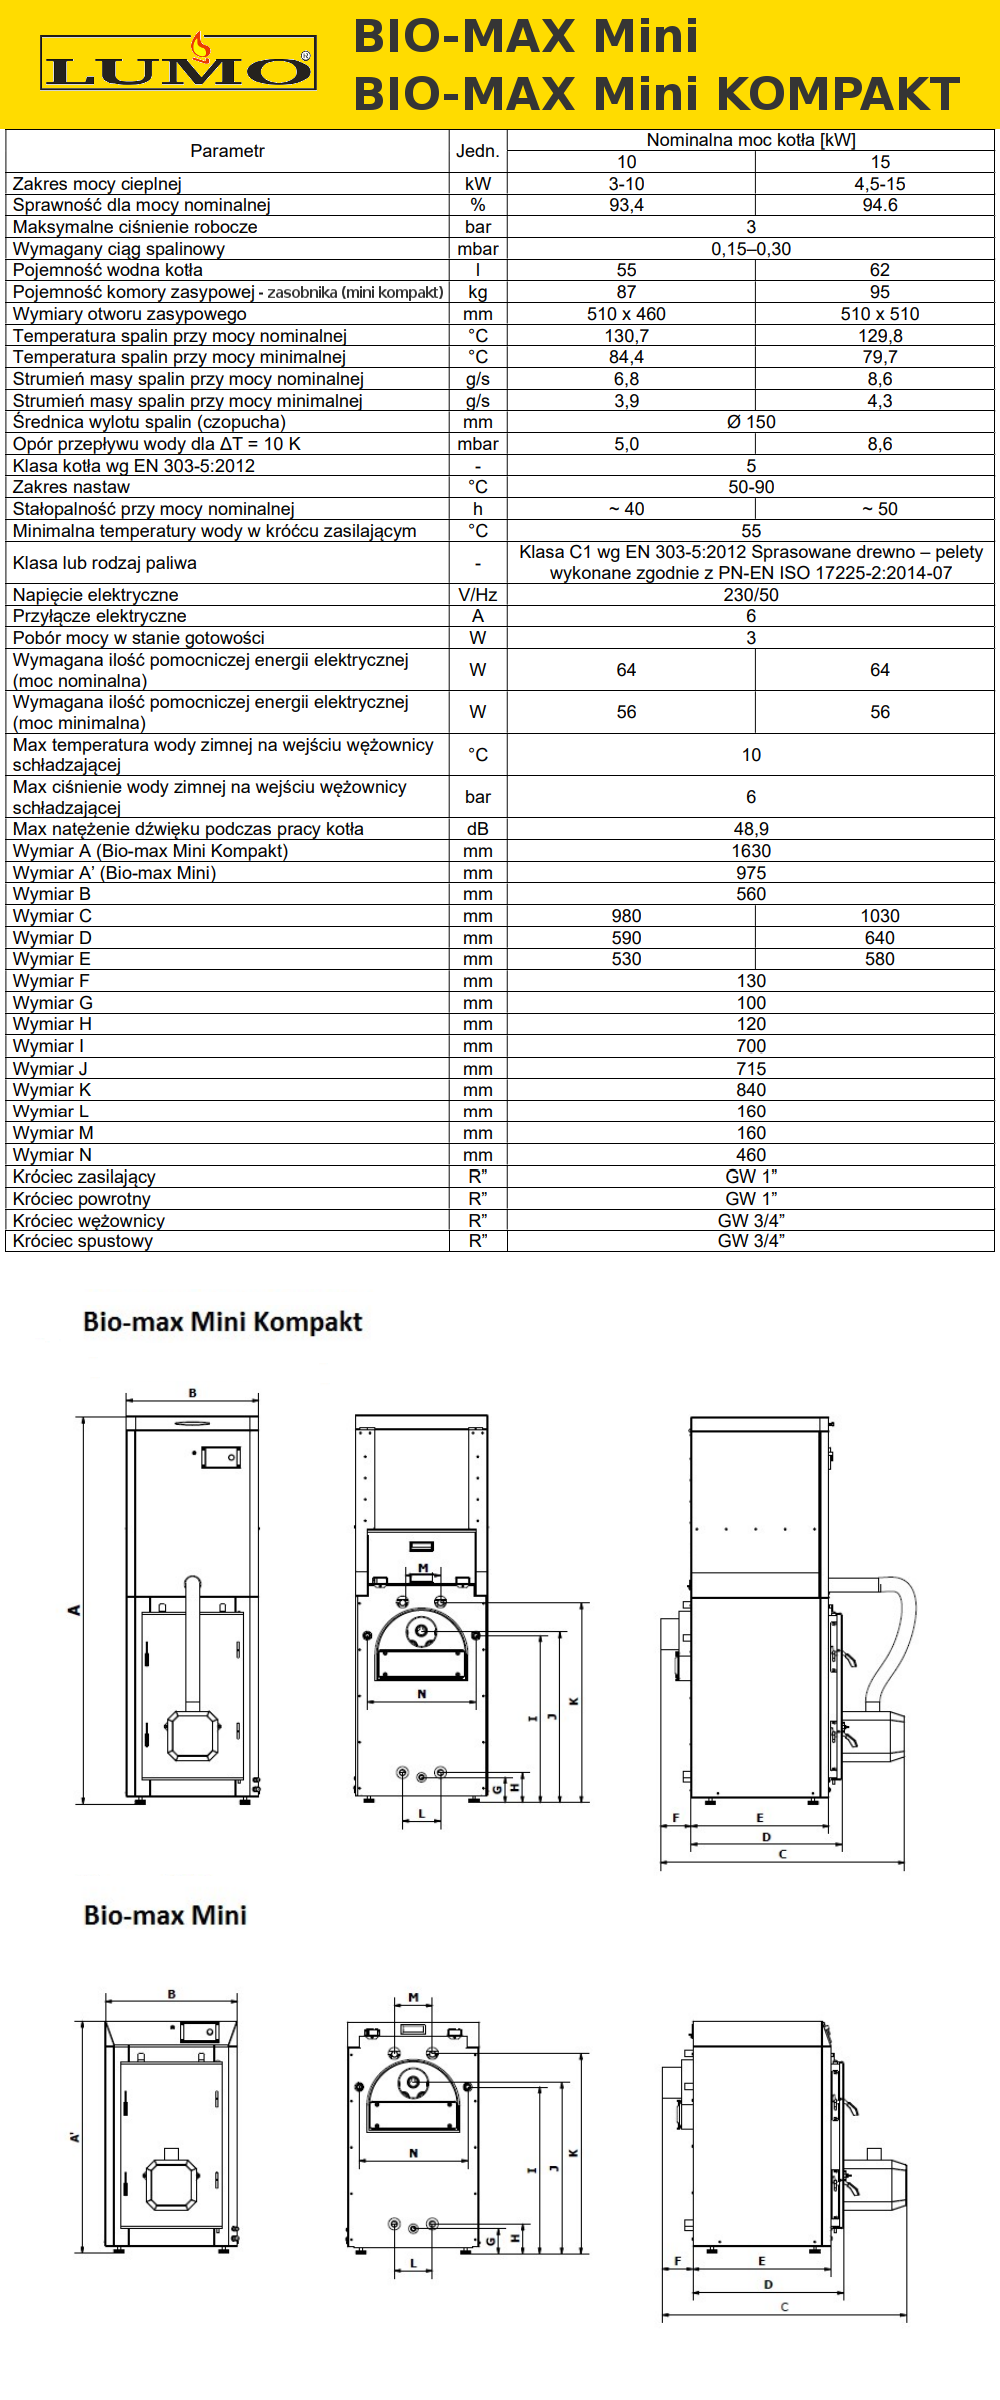 Parametry techniczne kotła Lumo Bio-Max Mini i Bio-Max Mini Kompakt